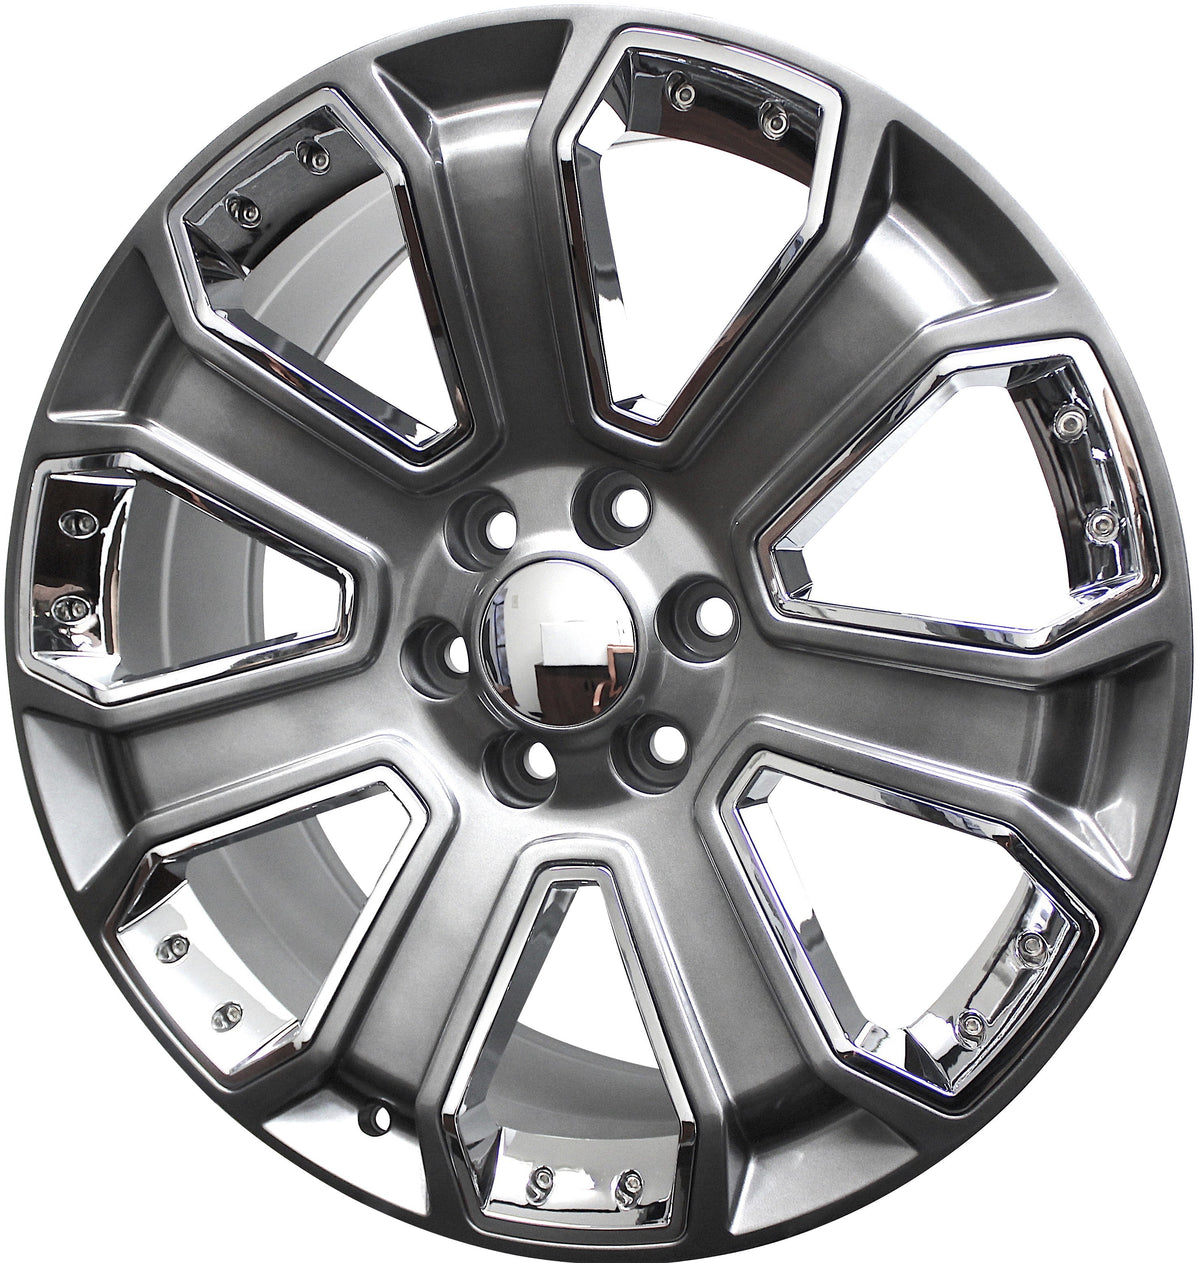 24” Chevy/GMC Rims Tahoe Yukon Sierra Silverado Suburban Avalanche LTZ Wheels Chrome Inserts